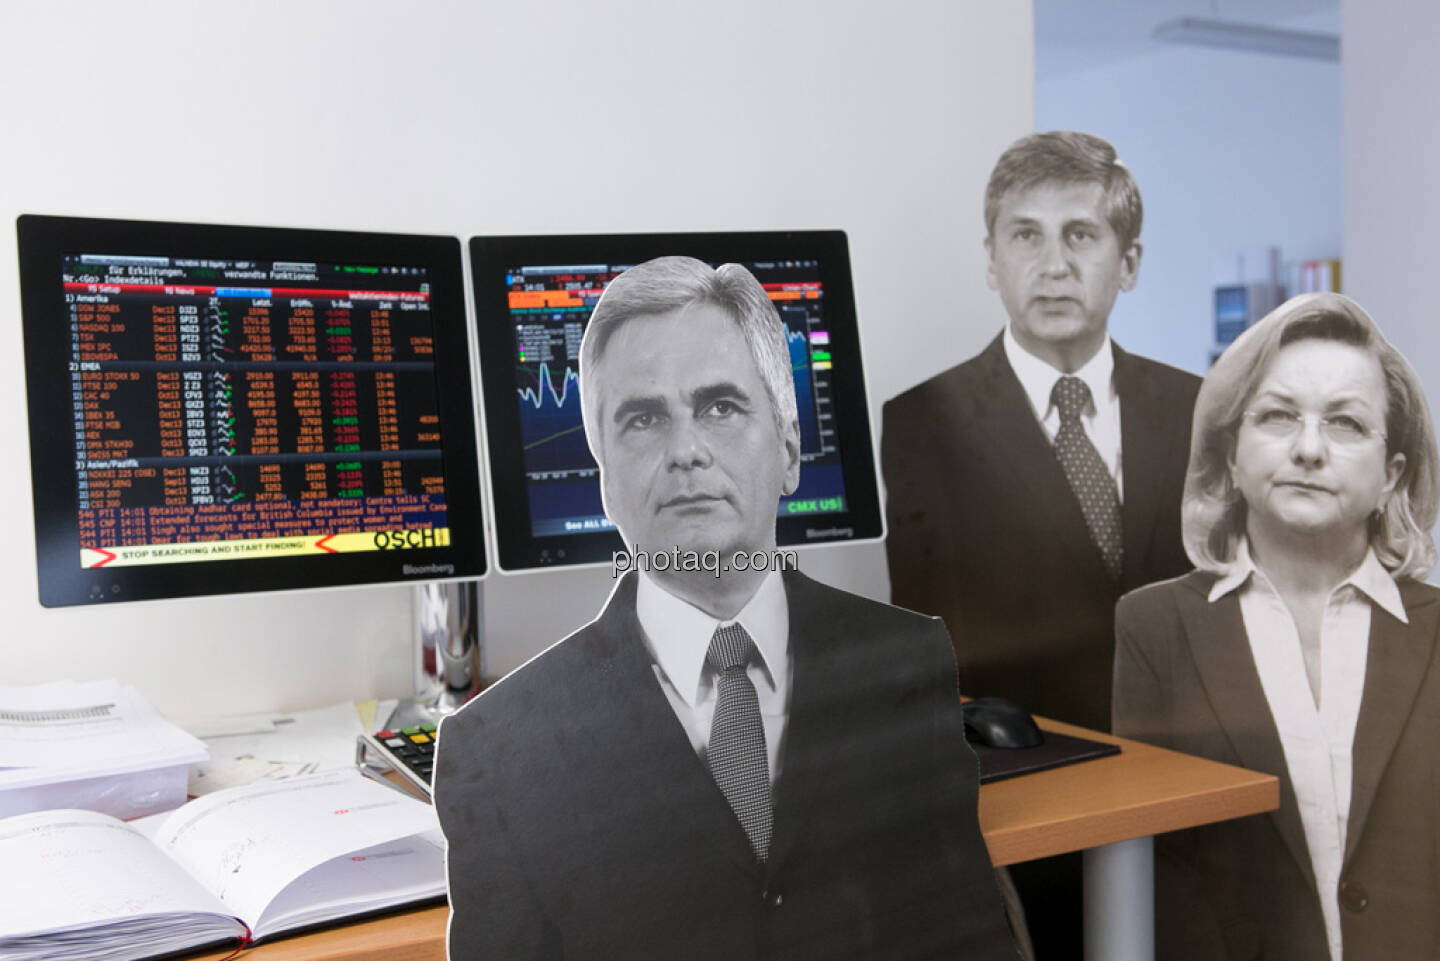  Werner Faymann, Michael Spindelegger, Maria Fekter vor dem ATX am Bloomberg-Bildschirm